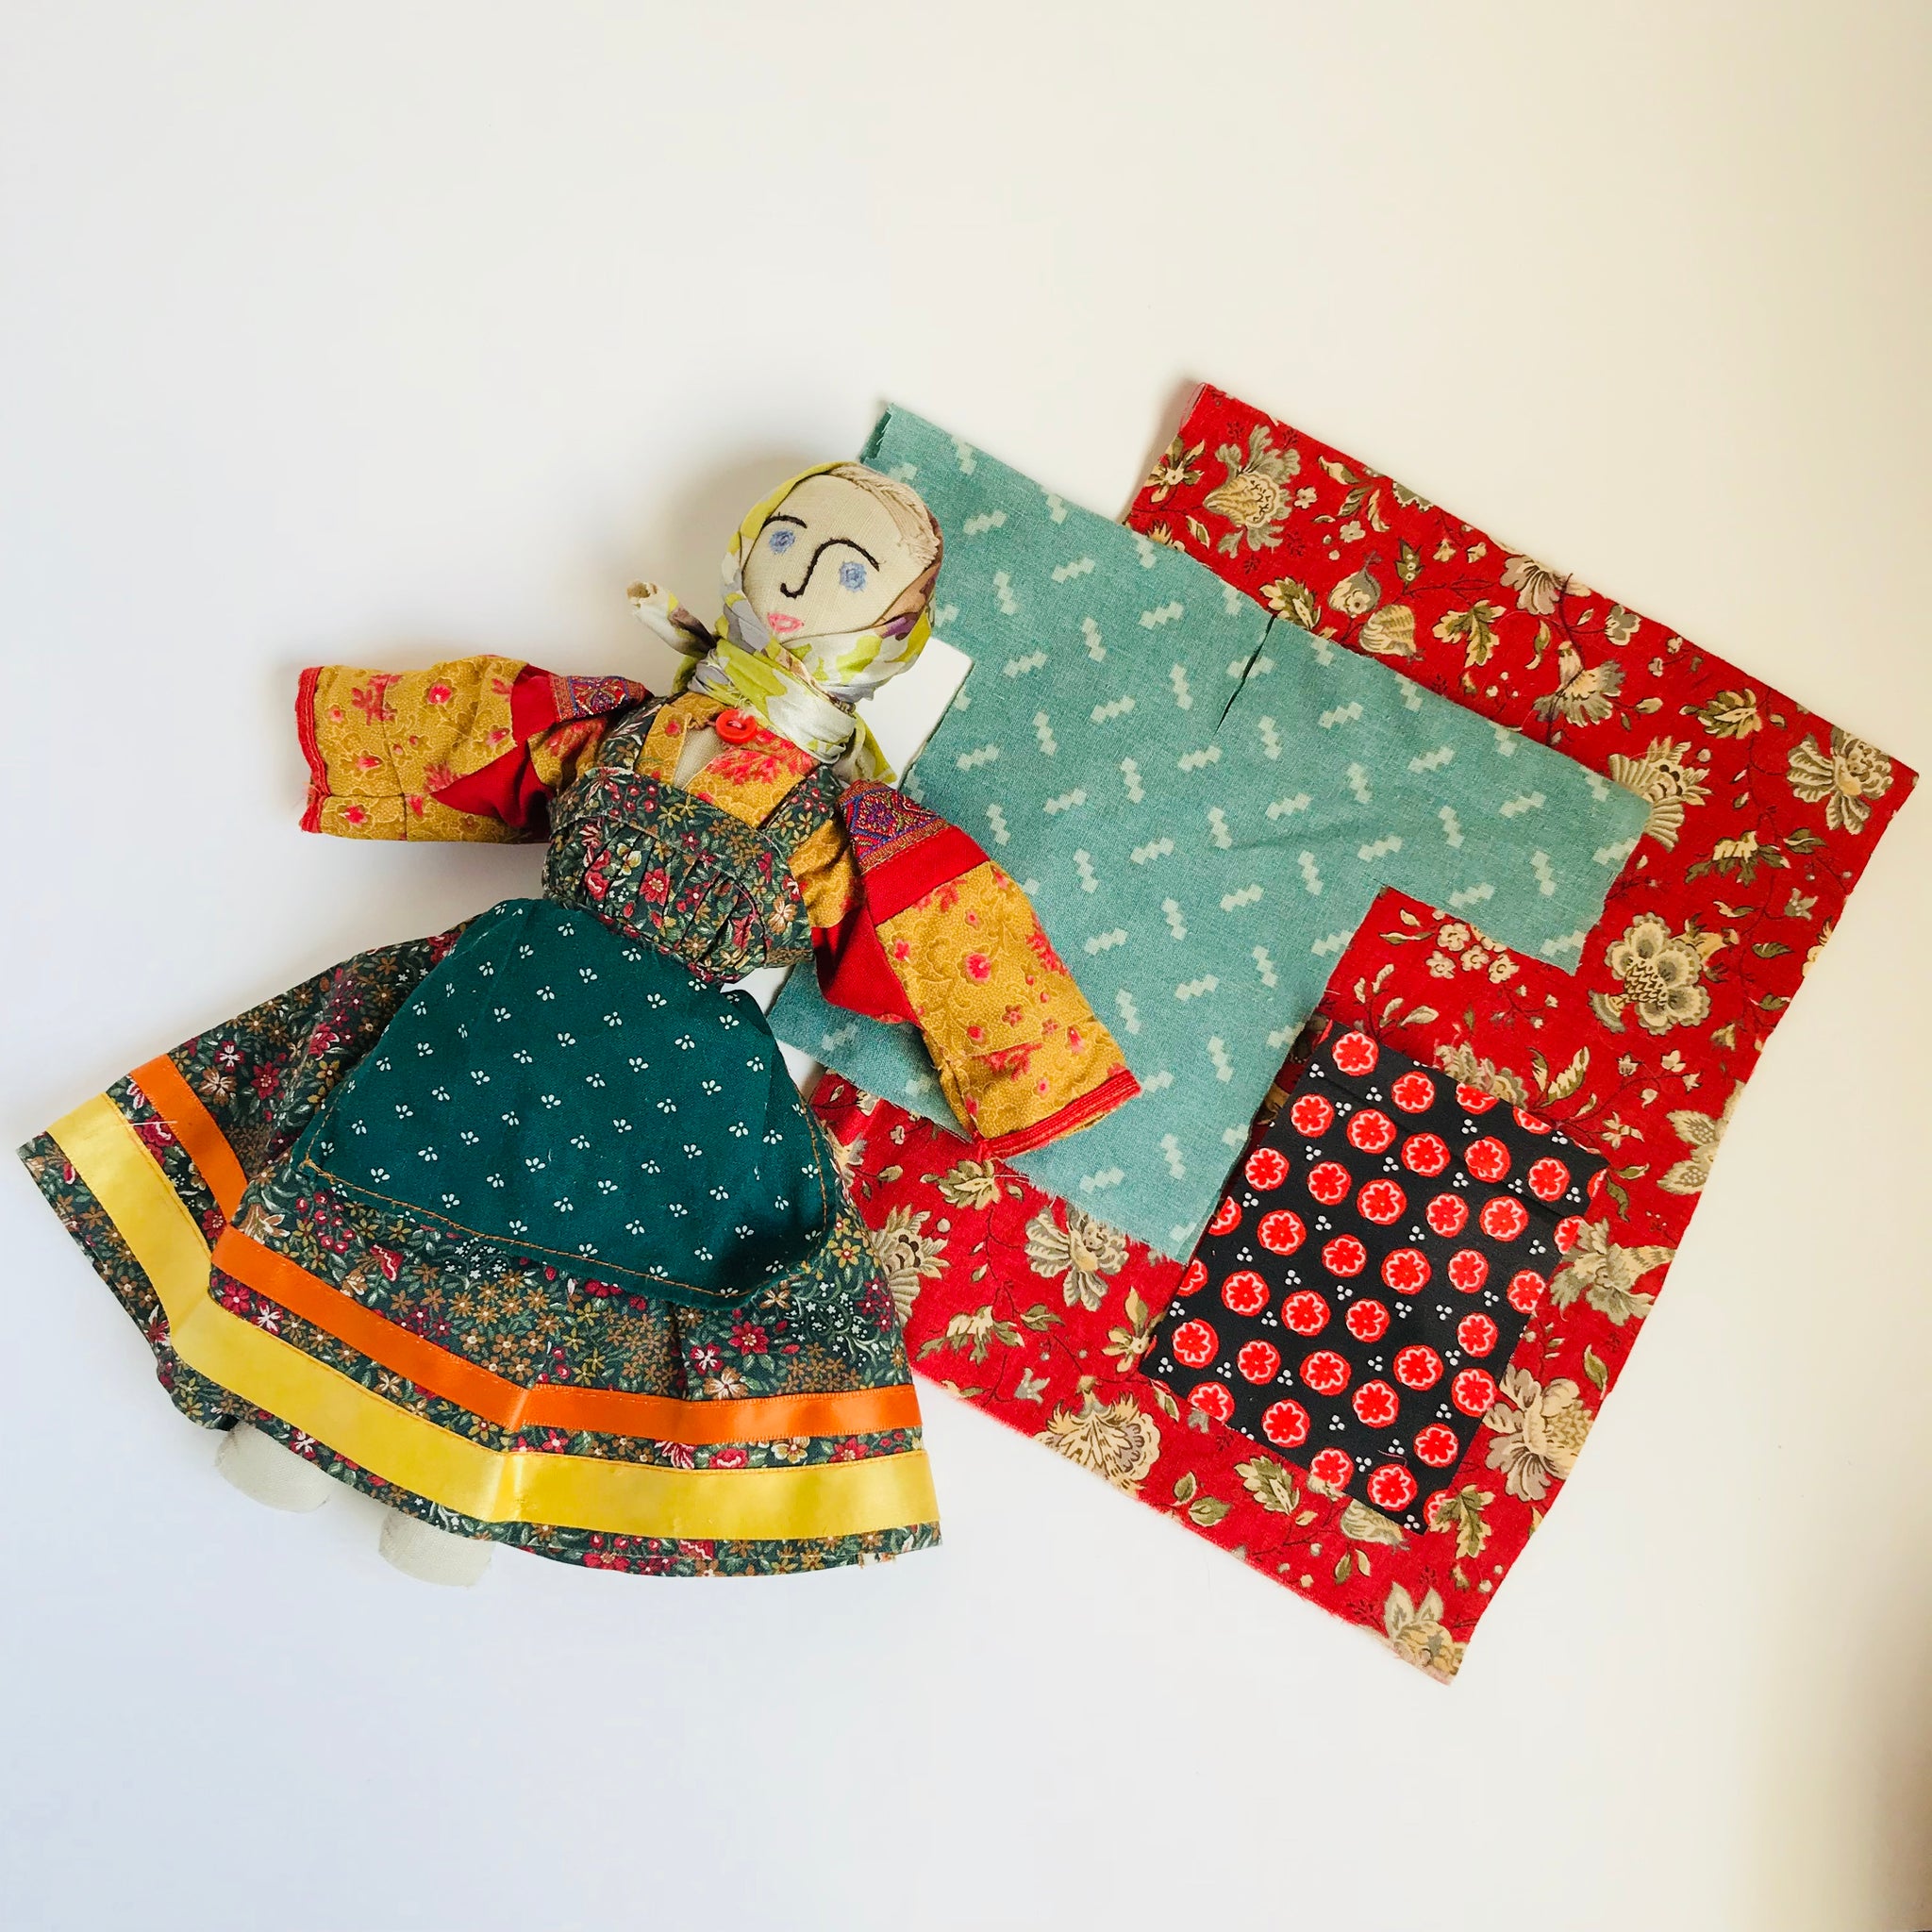 Baba (grandma) fabrics doll making kit. – Kedry gift store